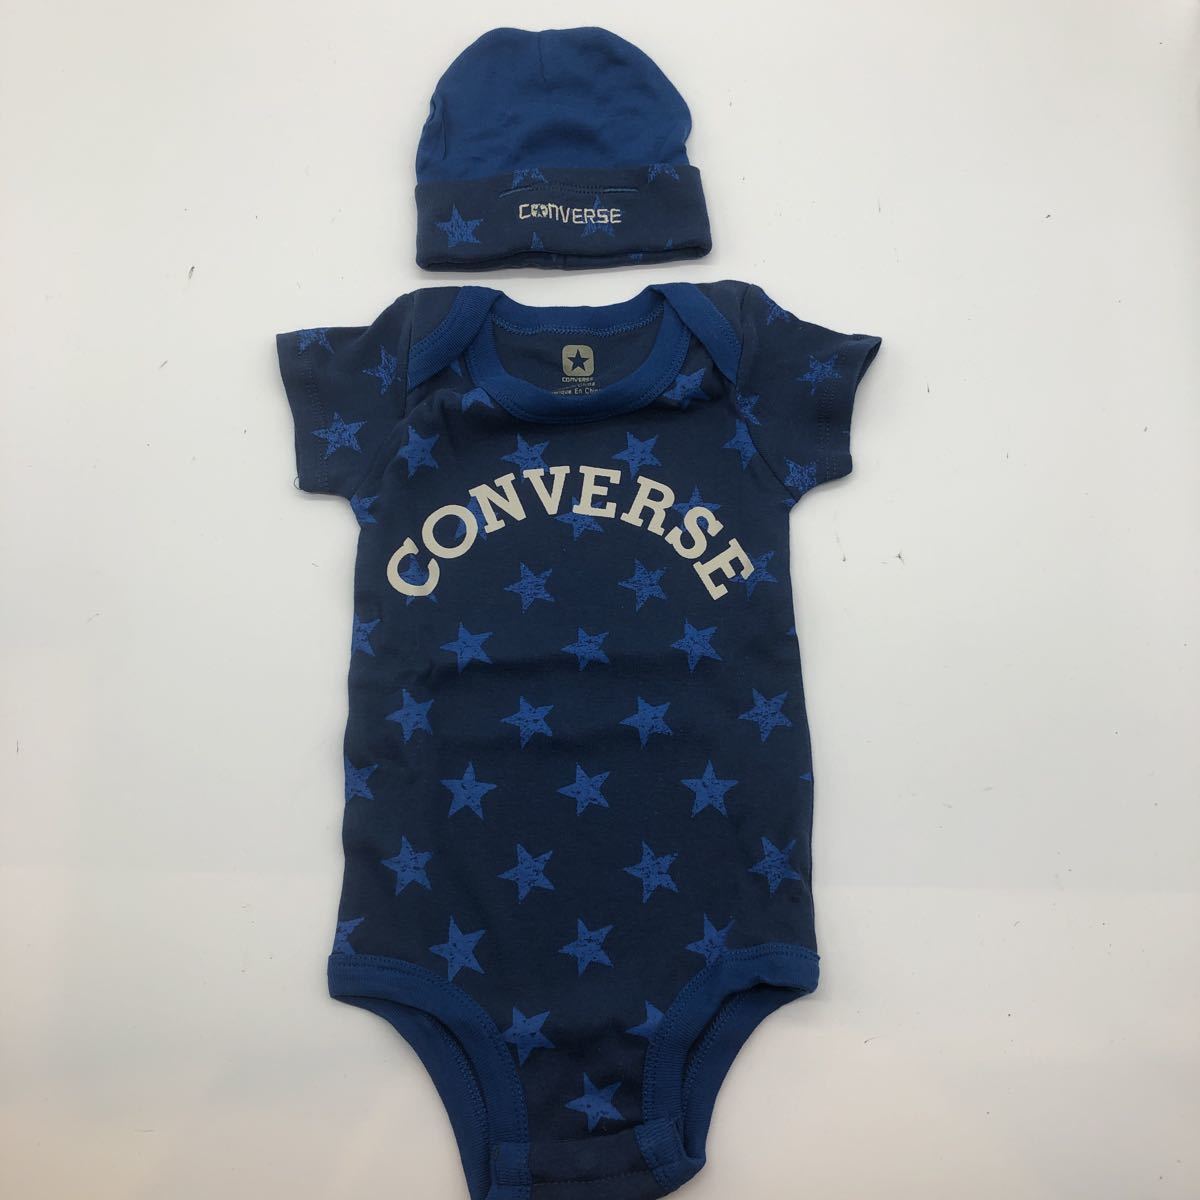 CONVERSE Infant 3pc set コンバース 0-6ヶ月児 赤ちゃん3点セット ロンパース ビーニー ブーティー 出産祝い BABY_画像2